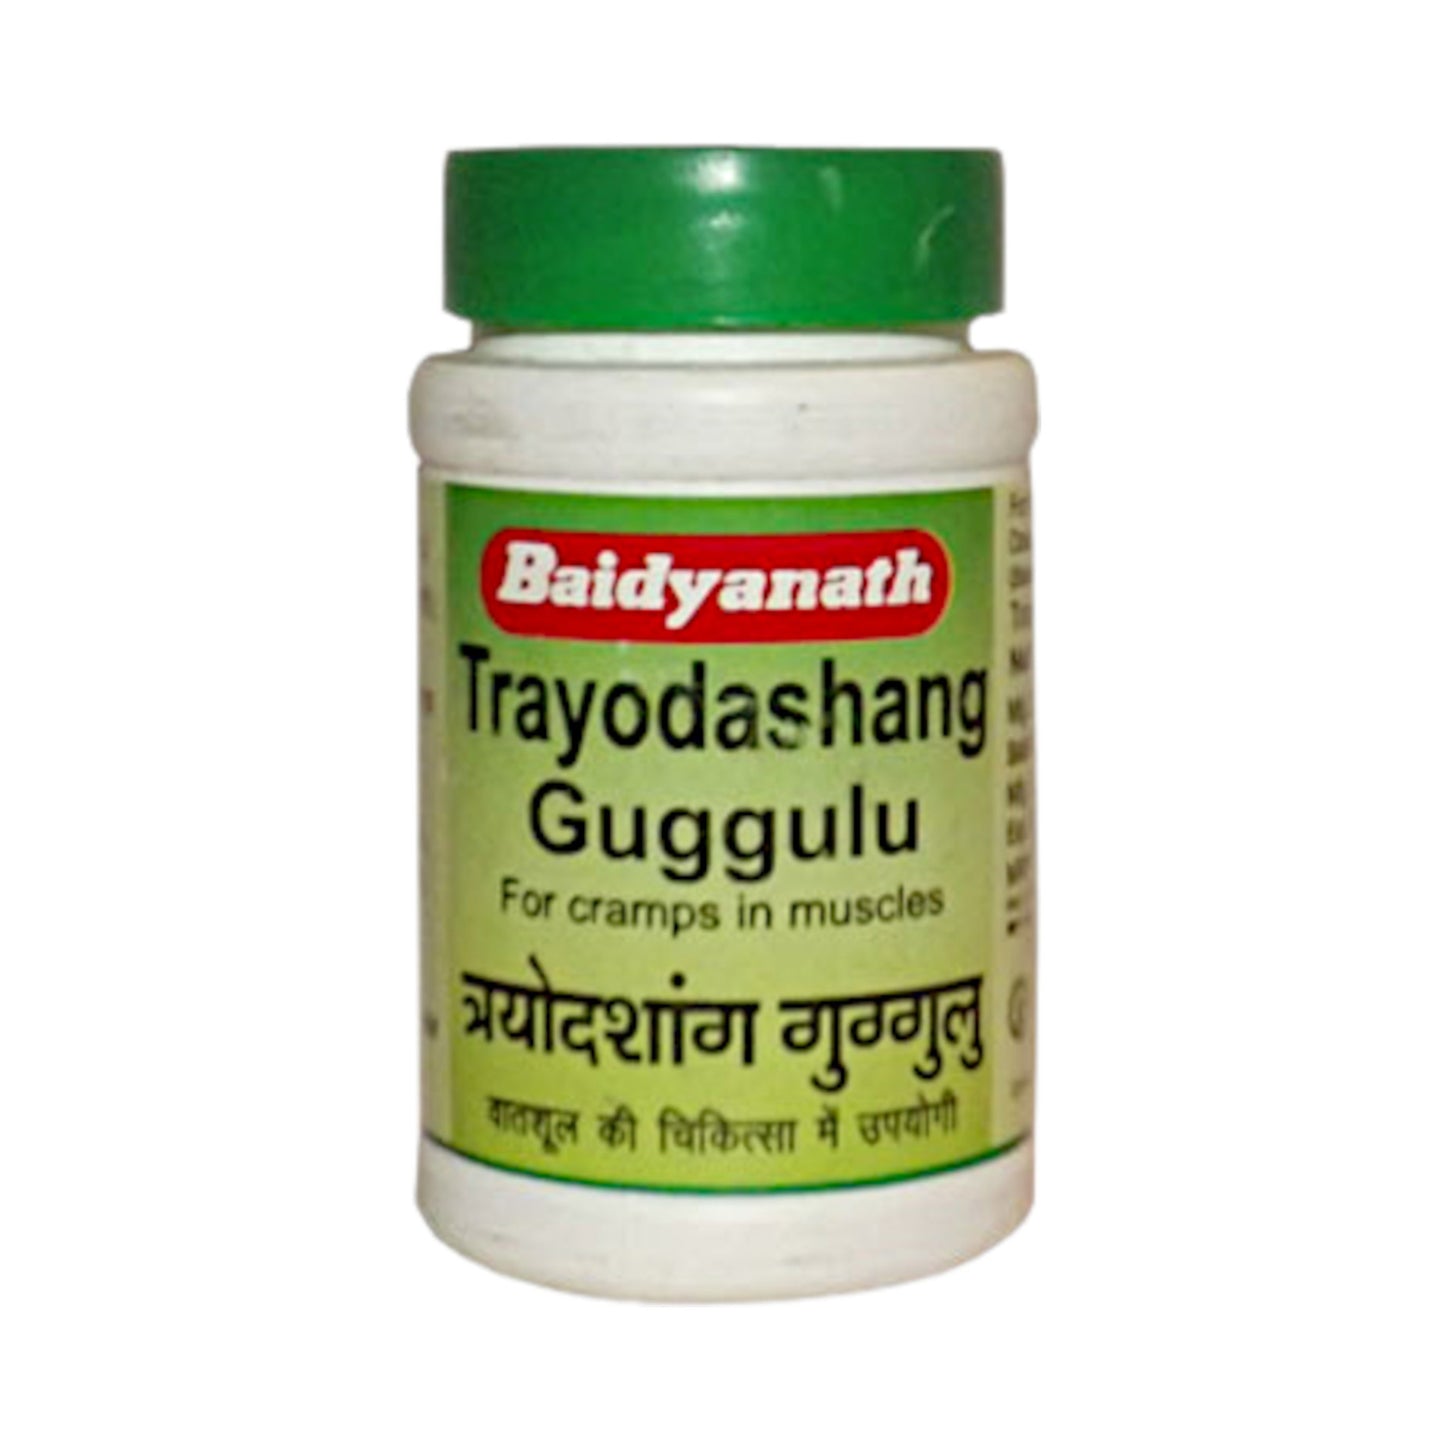 Baidyanath - Trayodashang Guggulu 80 Tablets